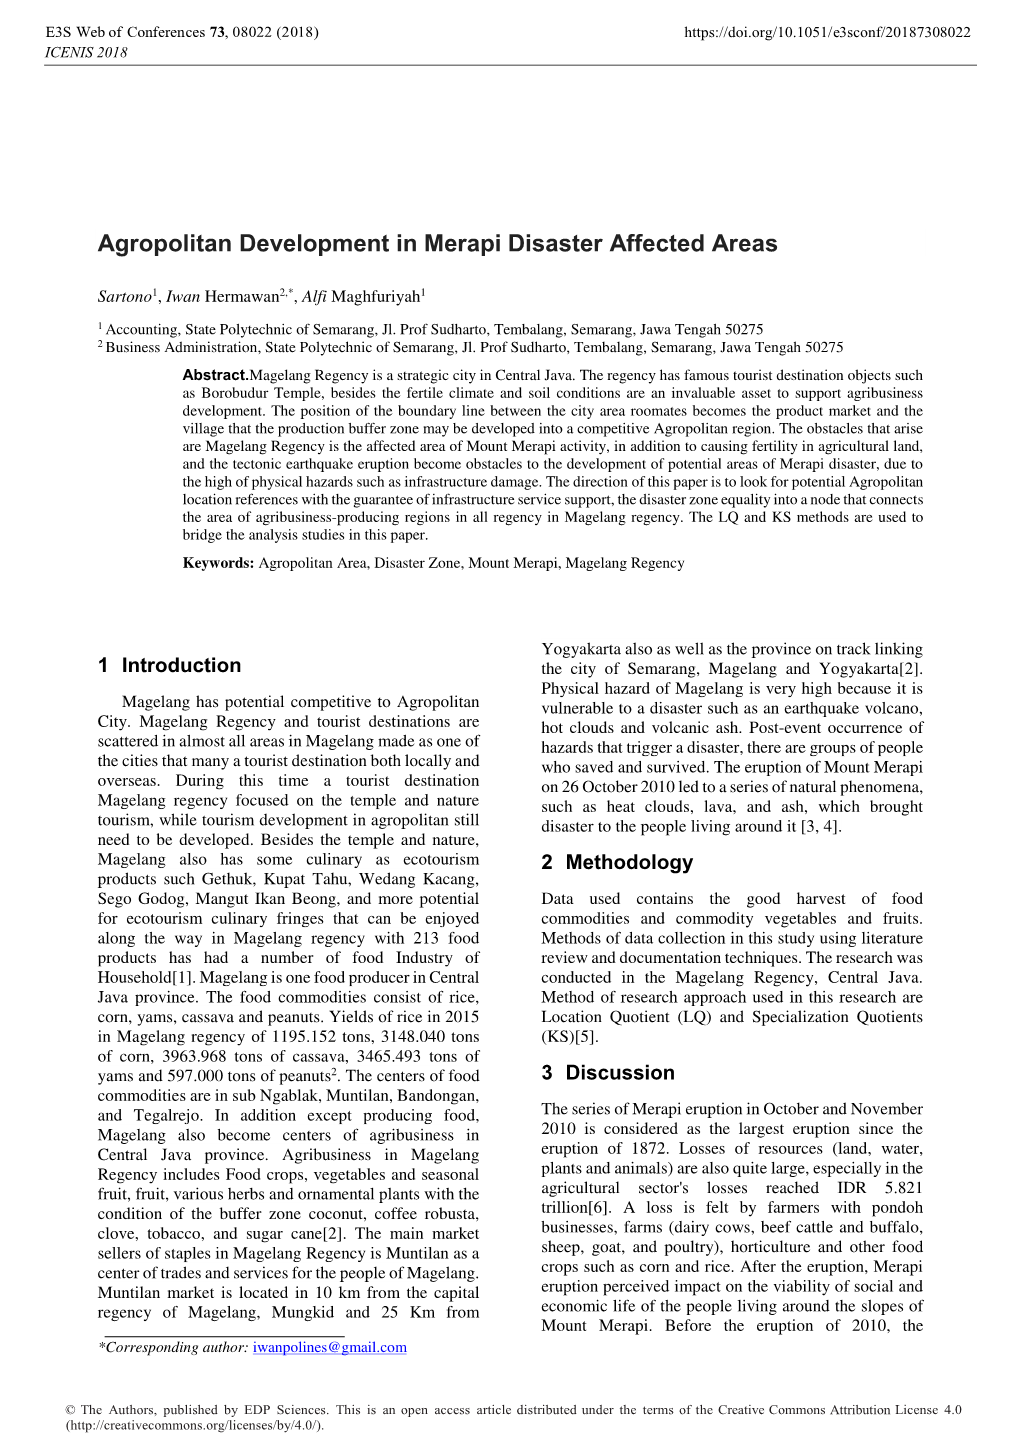 Agropolitan Development in Merapi Disaster Affected Areas